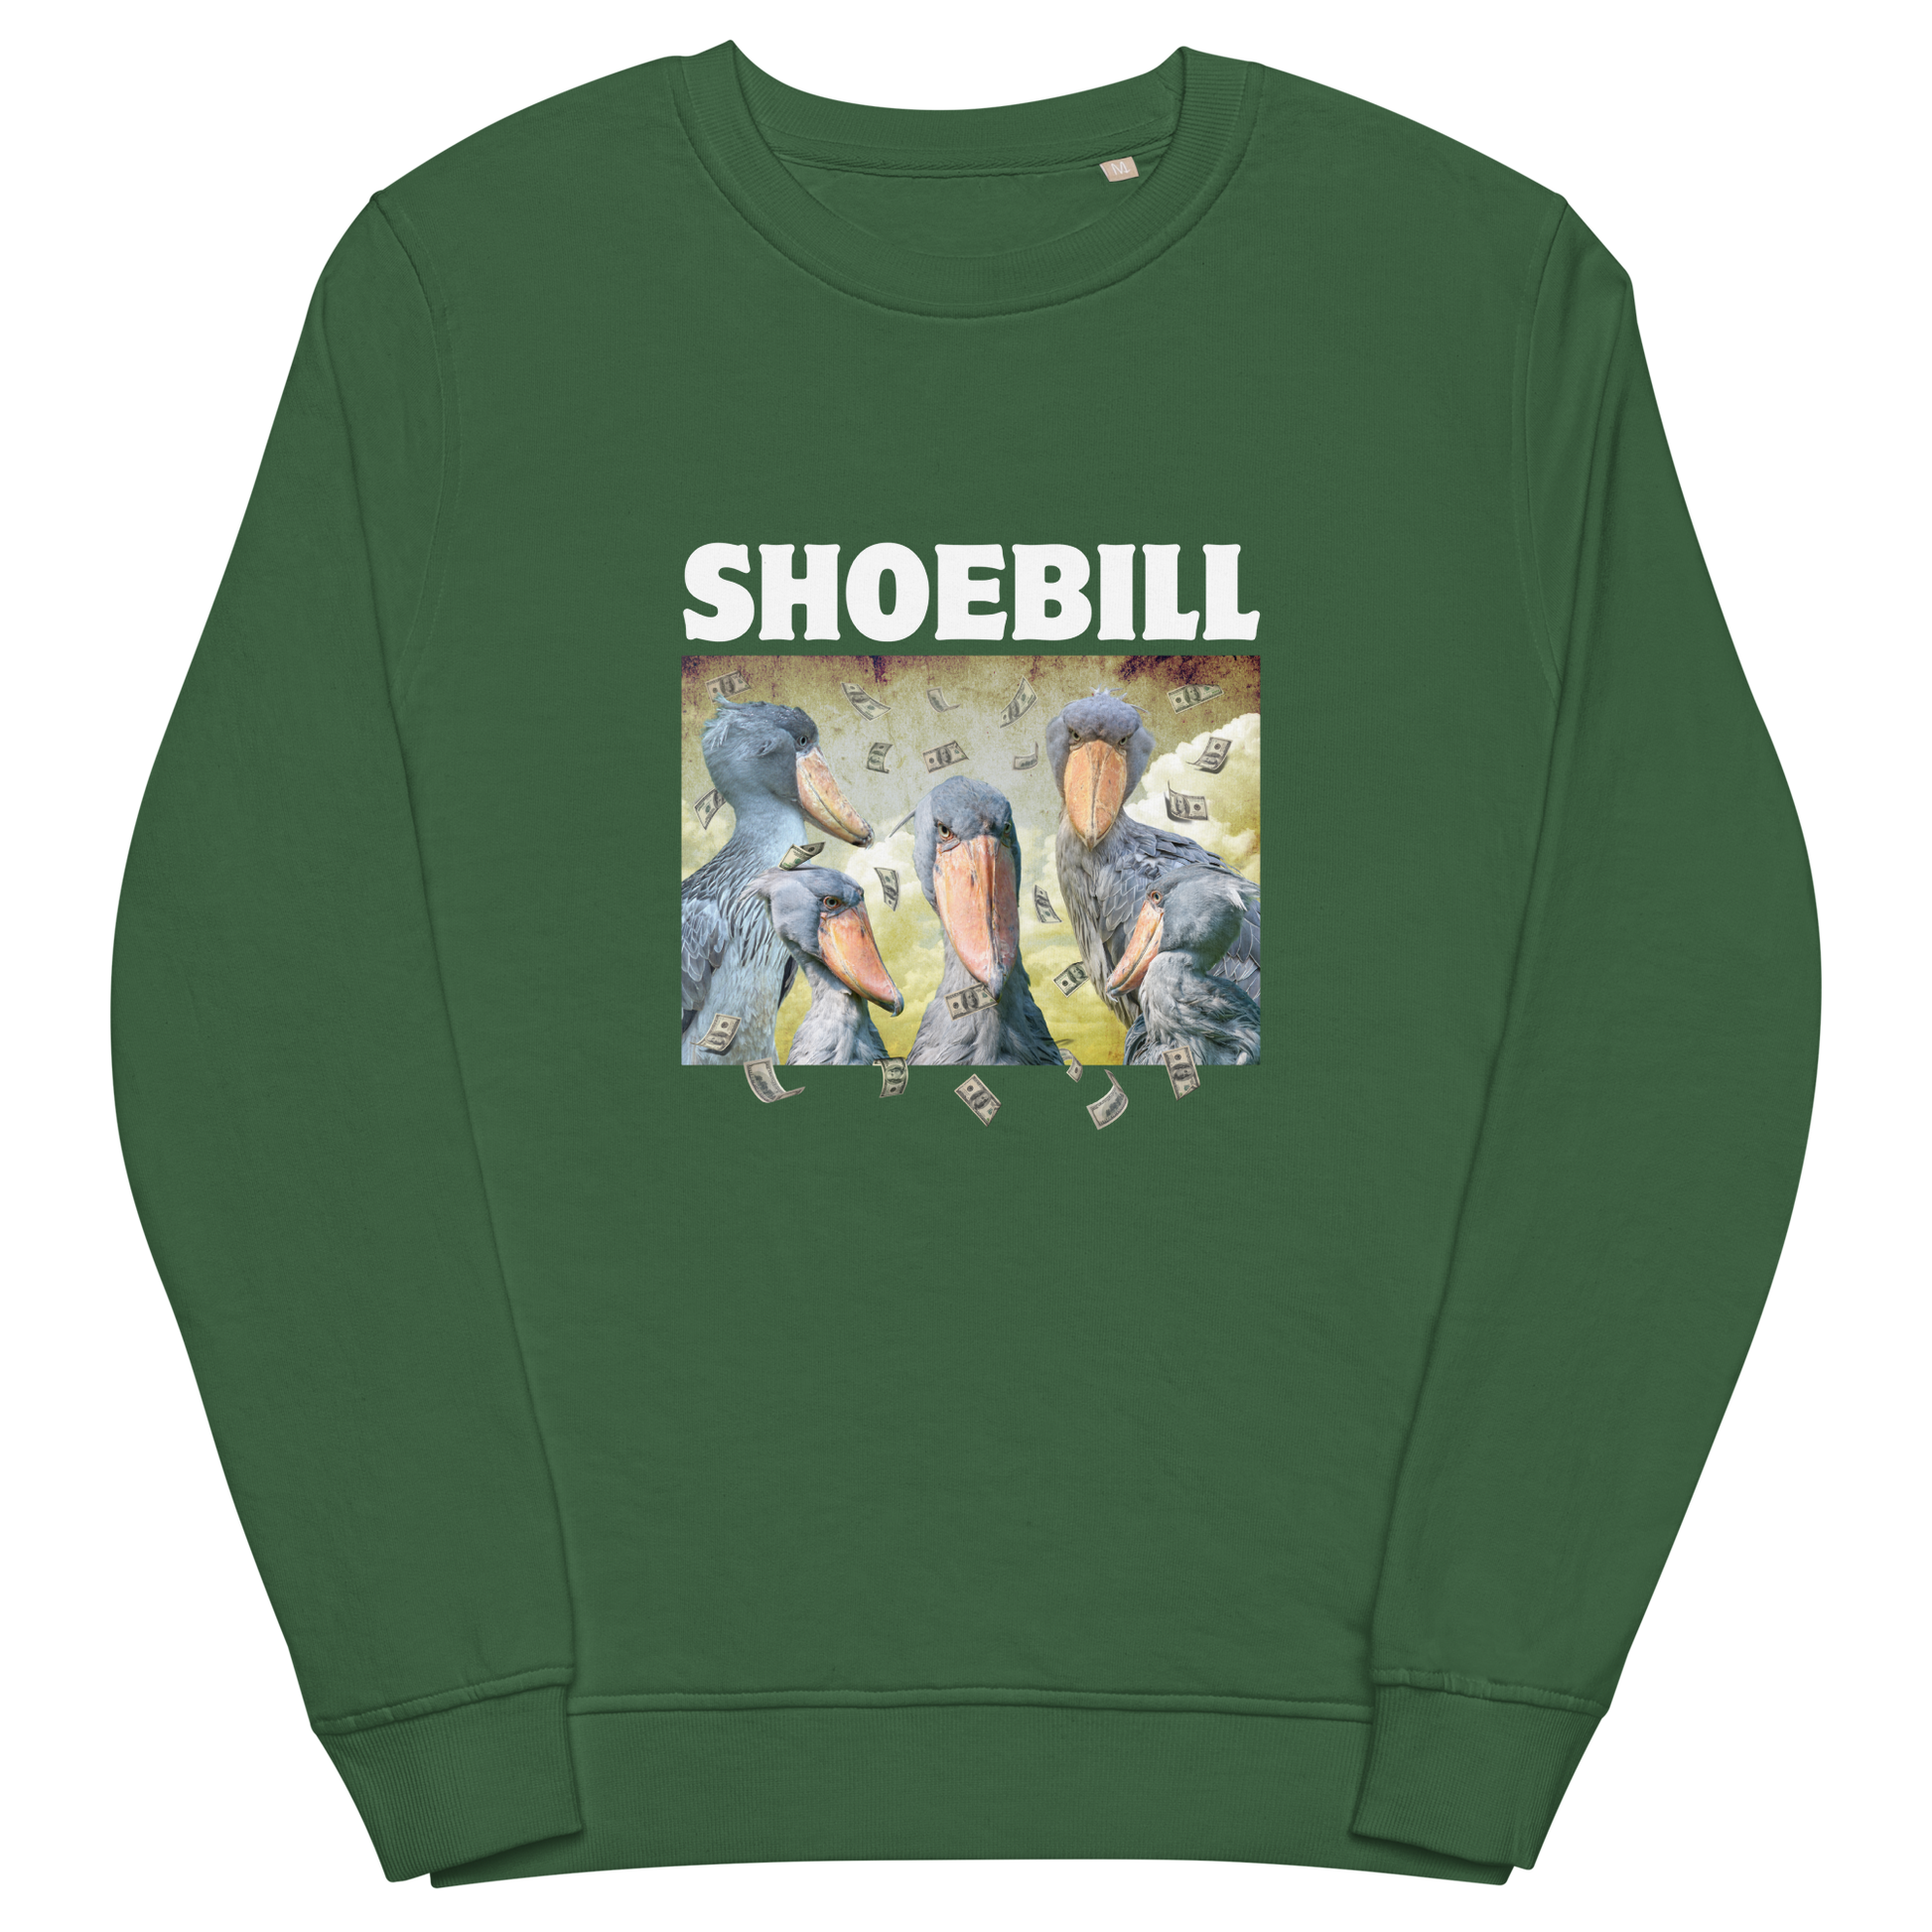 Bottle Green Shoebill Organic Sweatshirt featuring a cool Shoebill graphic on the chest - ArtsyFunny Graphic Shoebill Stork Sweatshirts - Boozy Fox